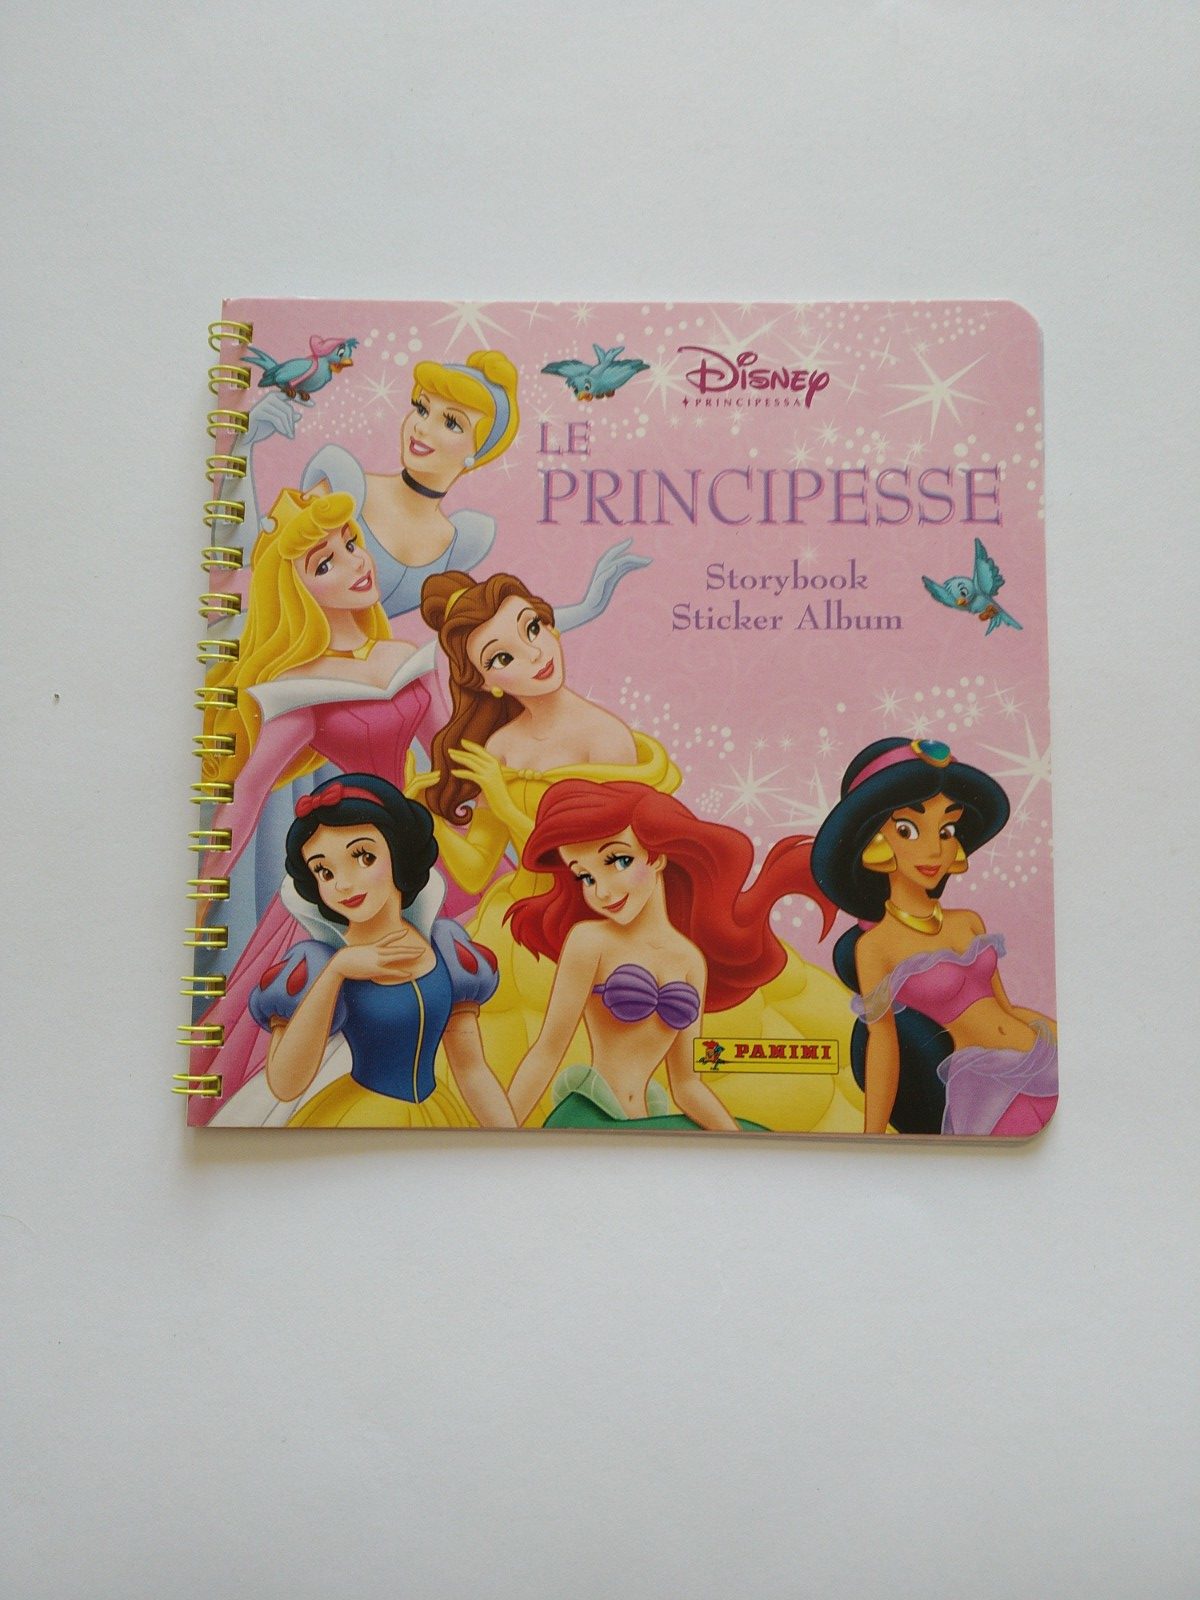 Le Principesse Disney Storybook Mini Album Figurine Panini